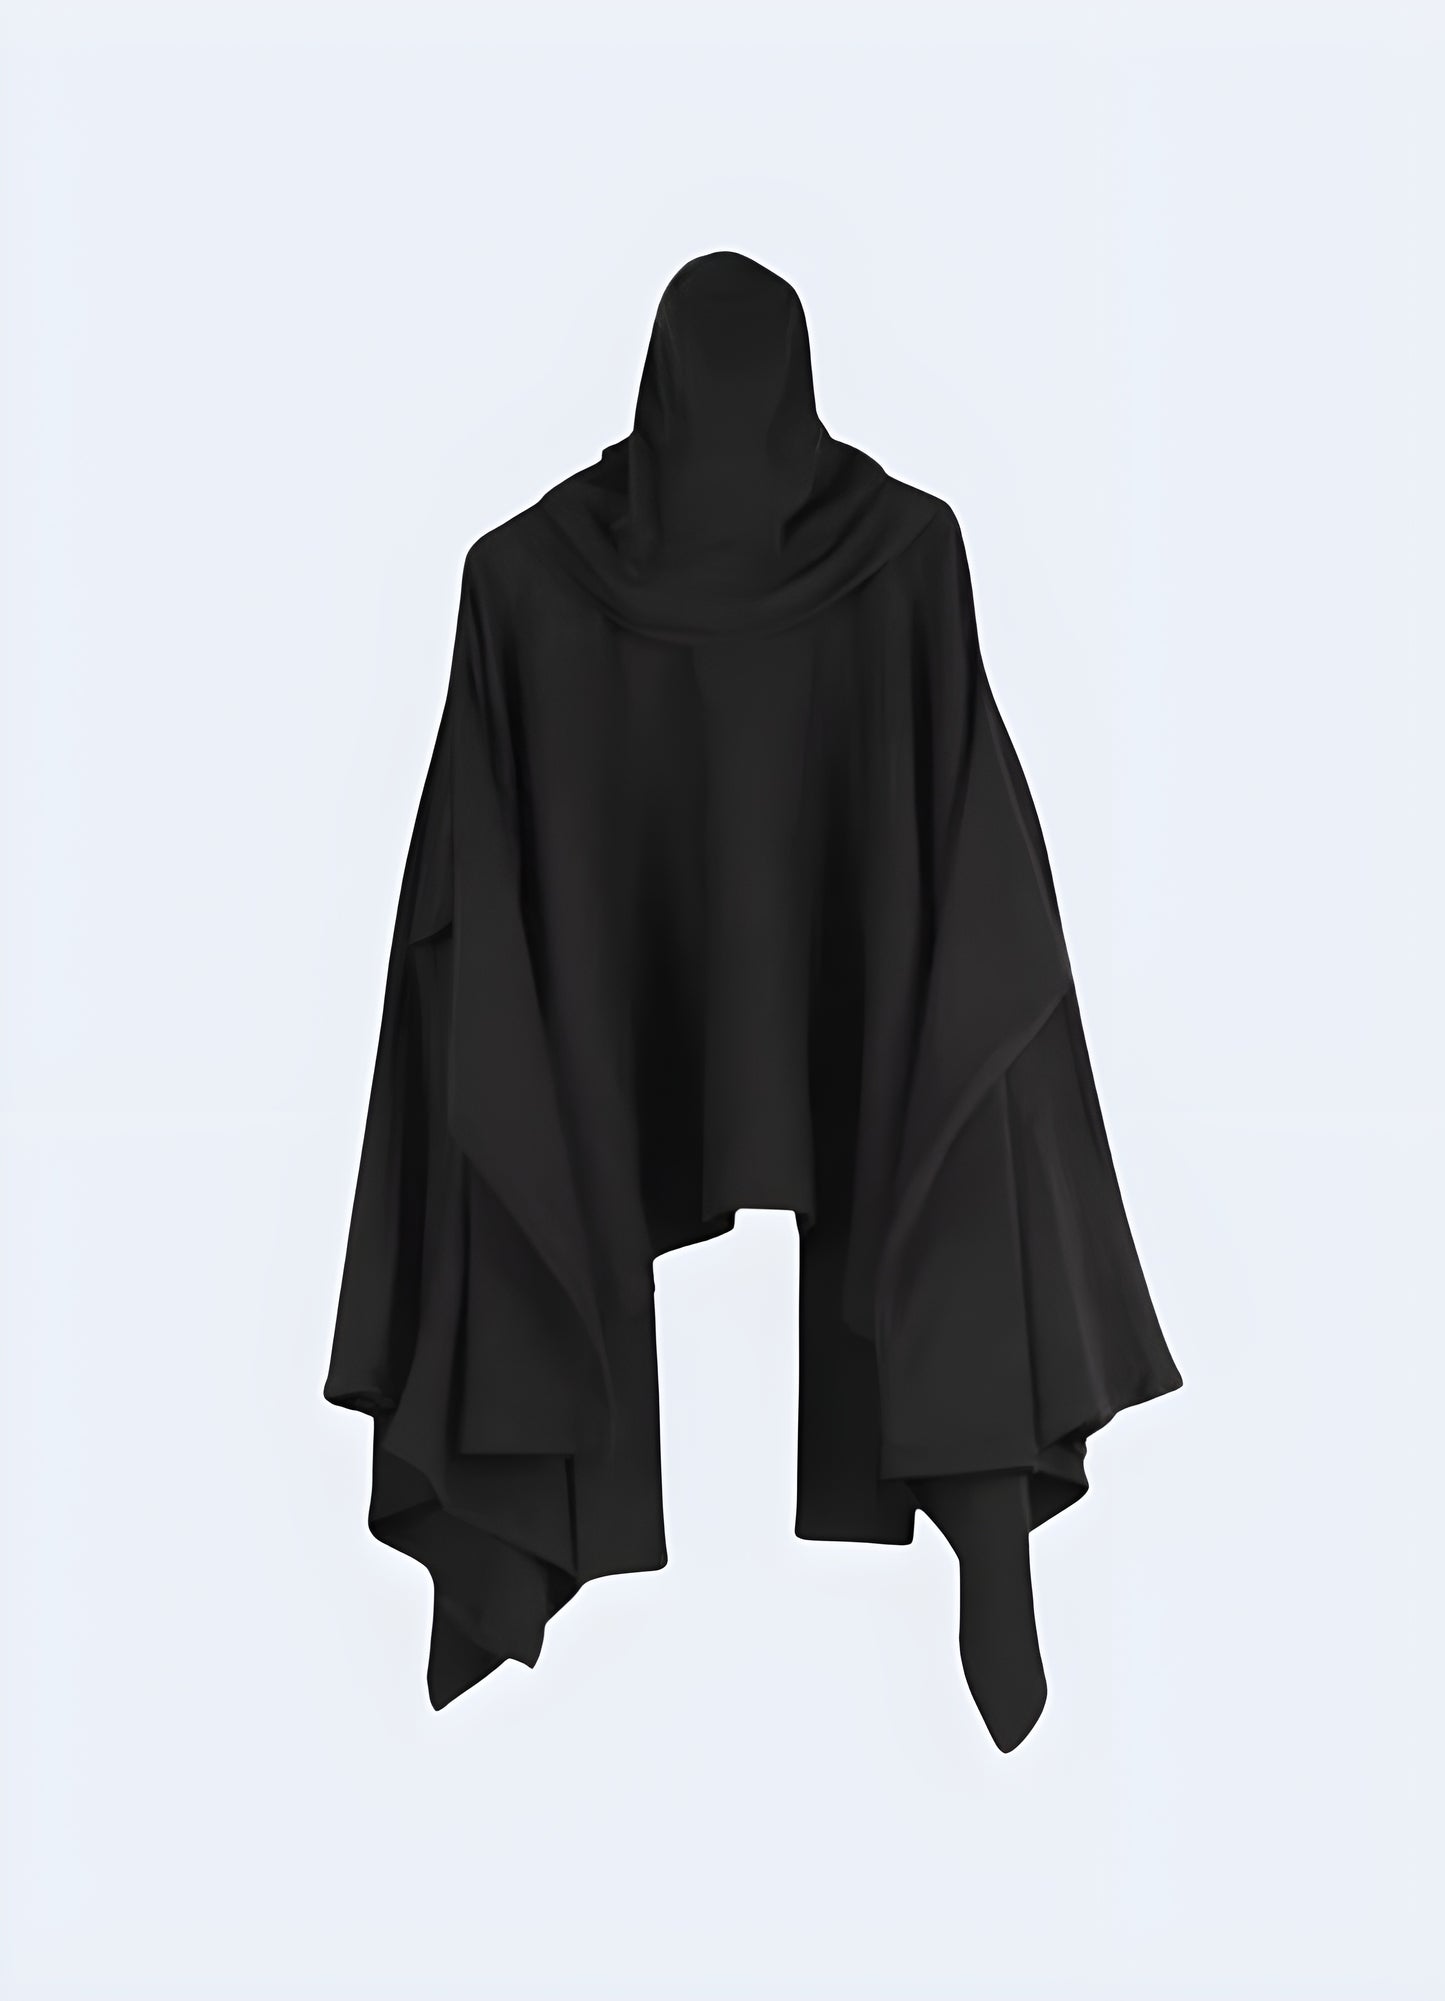 Cloak coat with hood model back view.